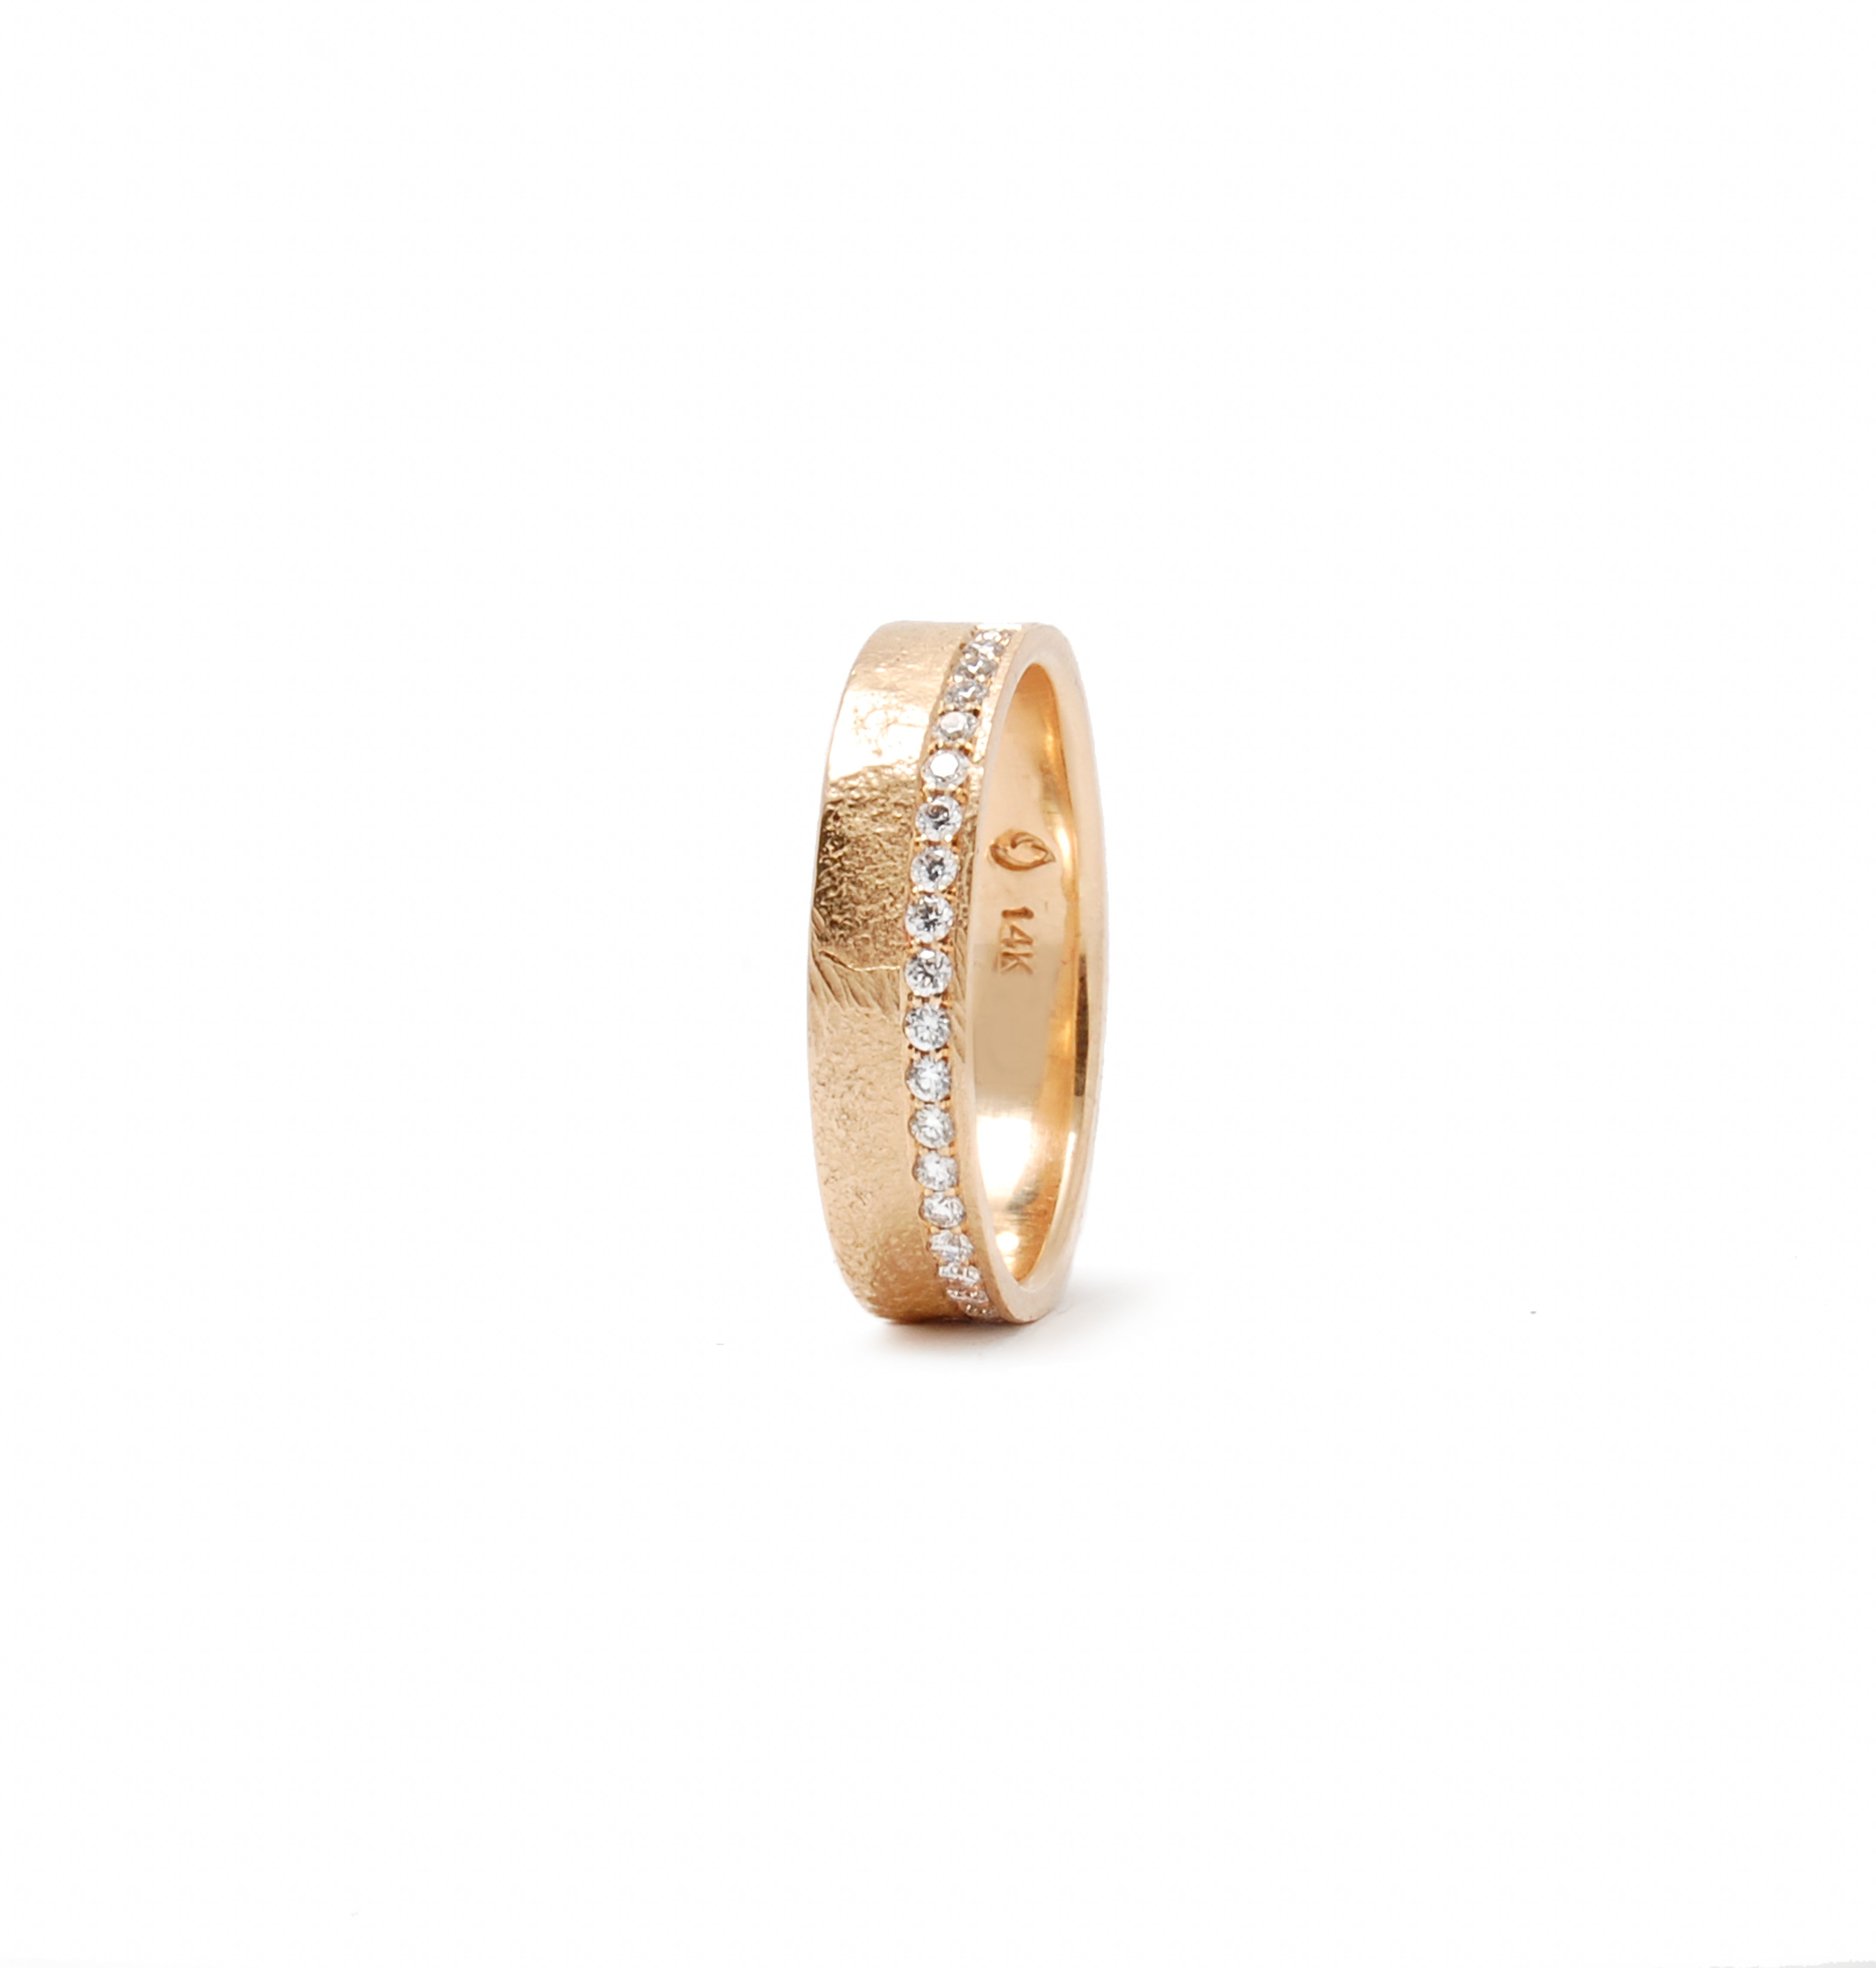  Kuyiuif 18K Gold Silver Wedding Ring Split Shank Pave